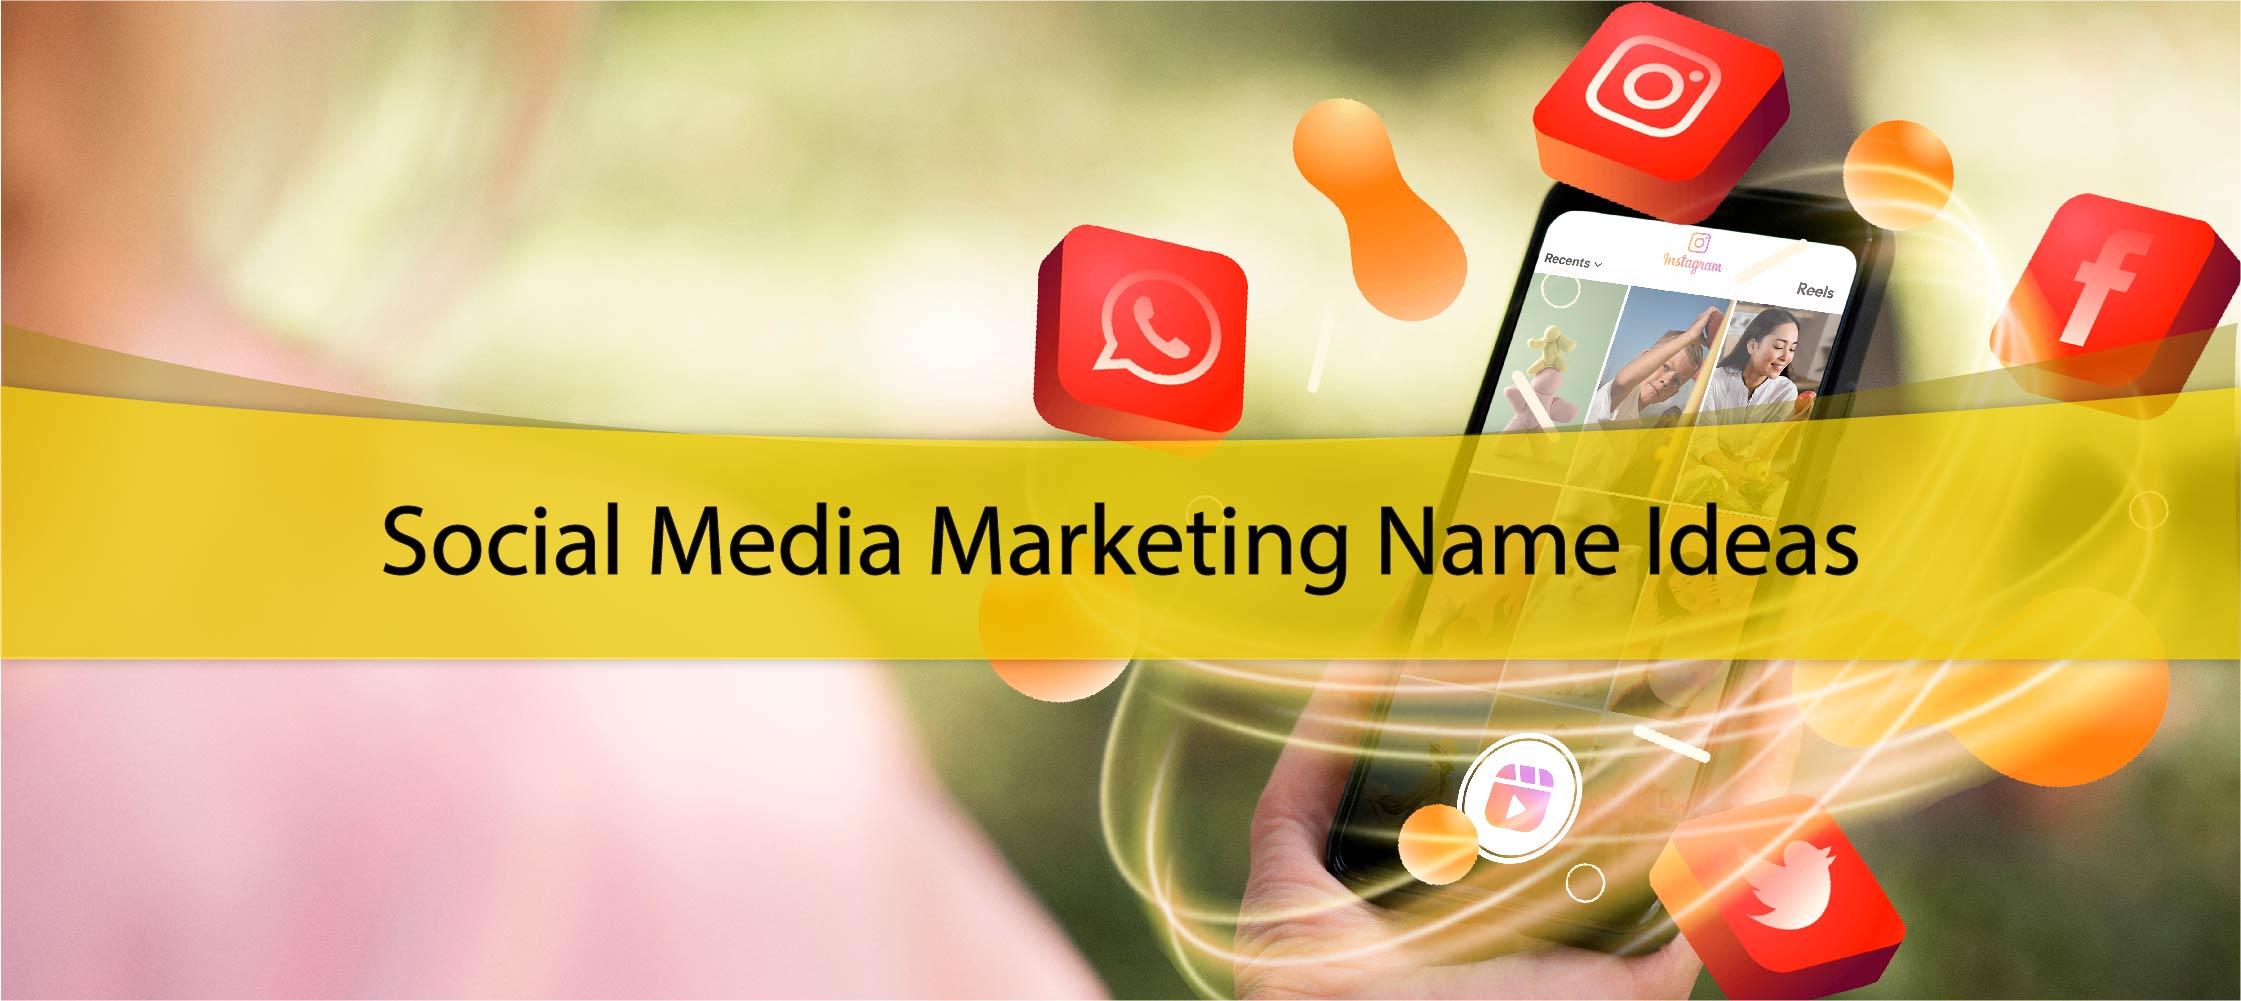 Social Media Marketing Name Ideas